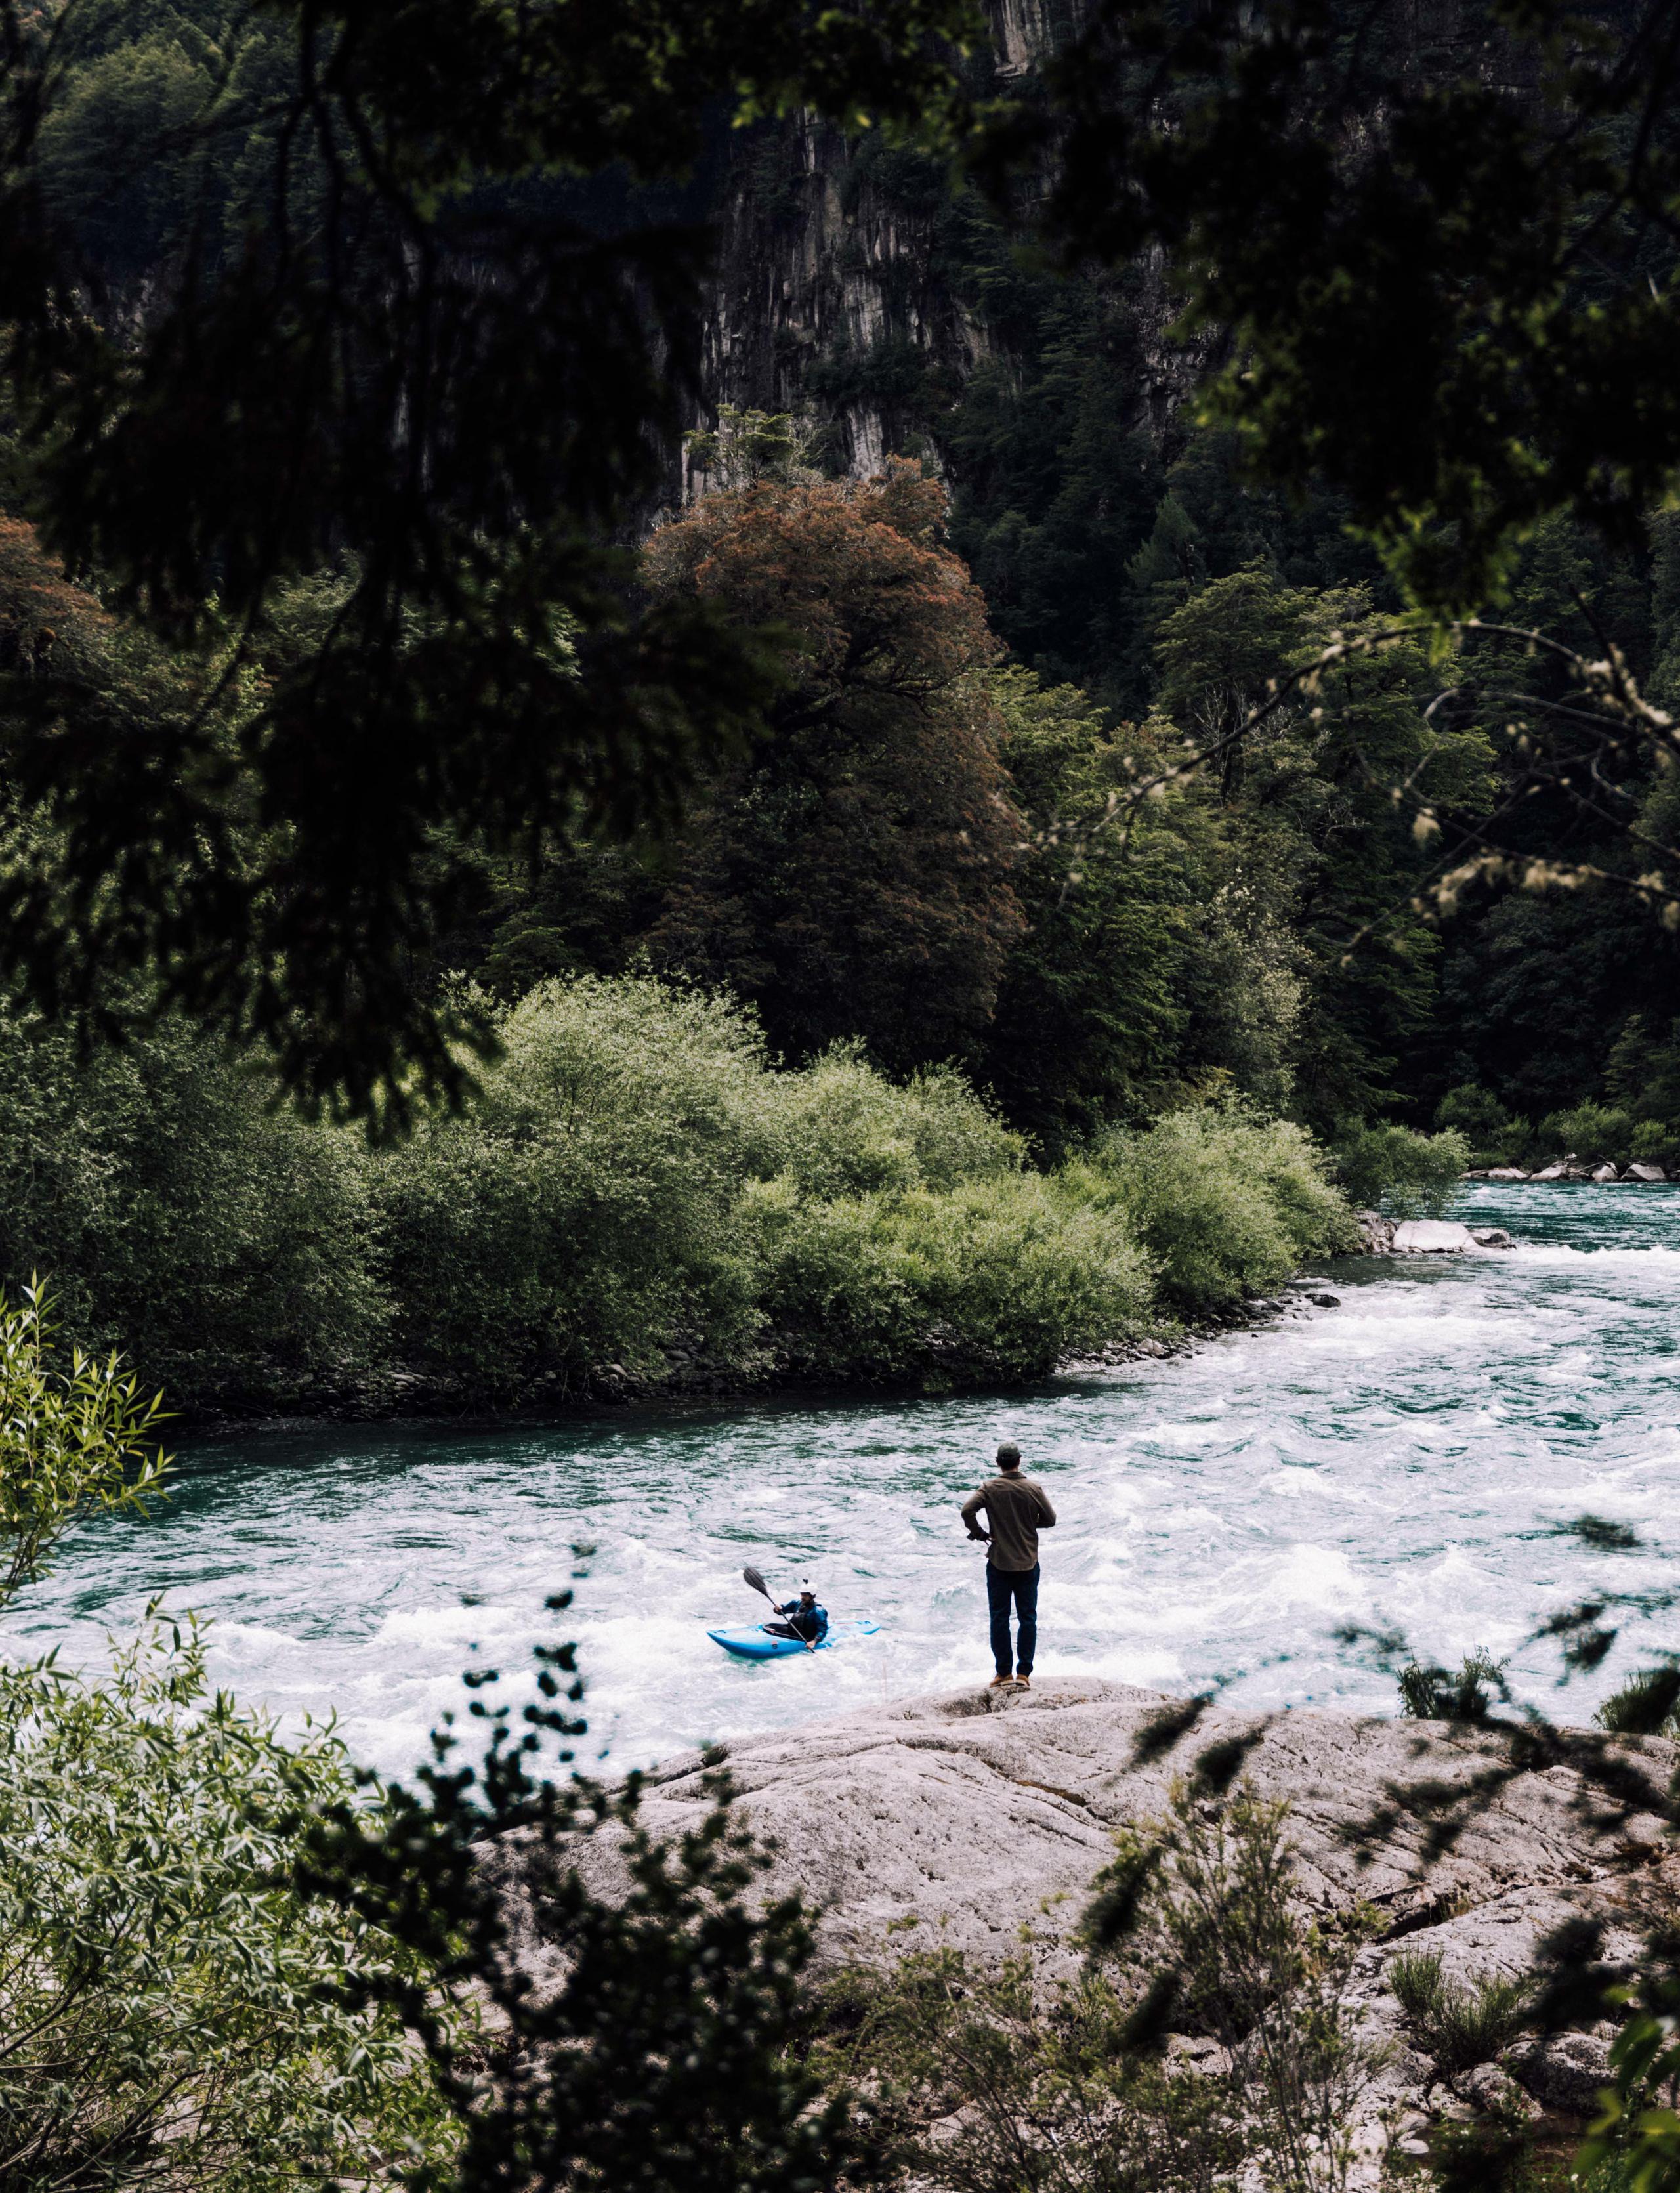 Man on edge of river watching person kayaking down river in Patagonia